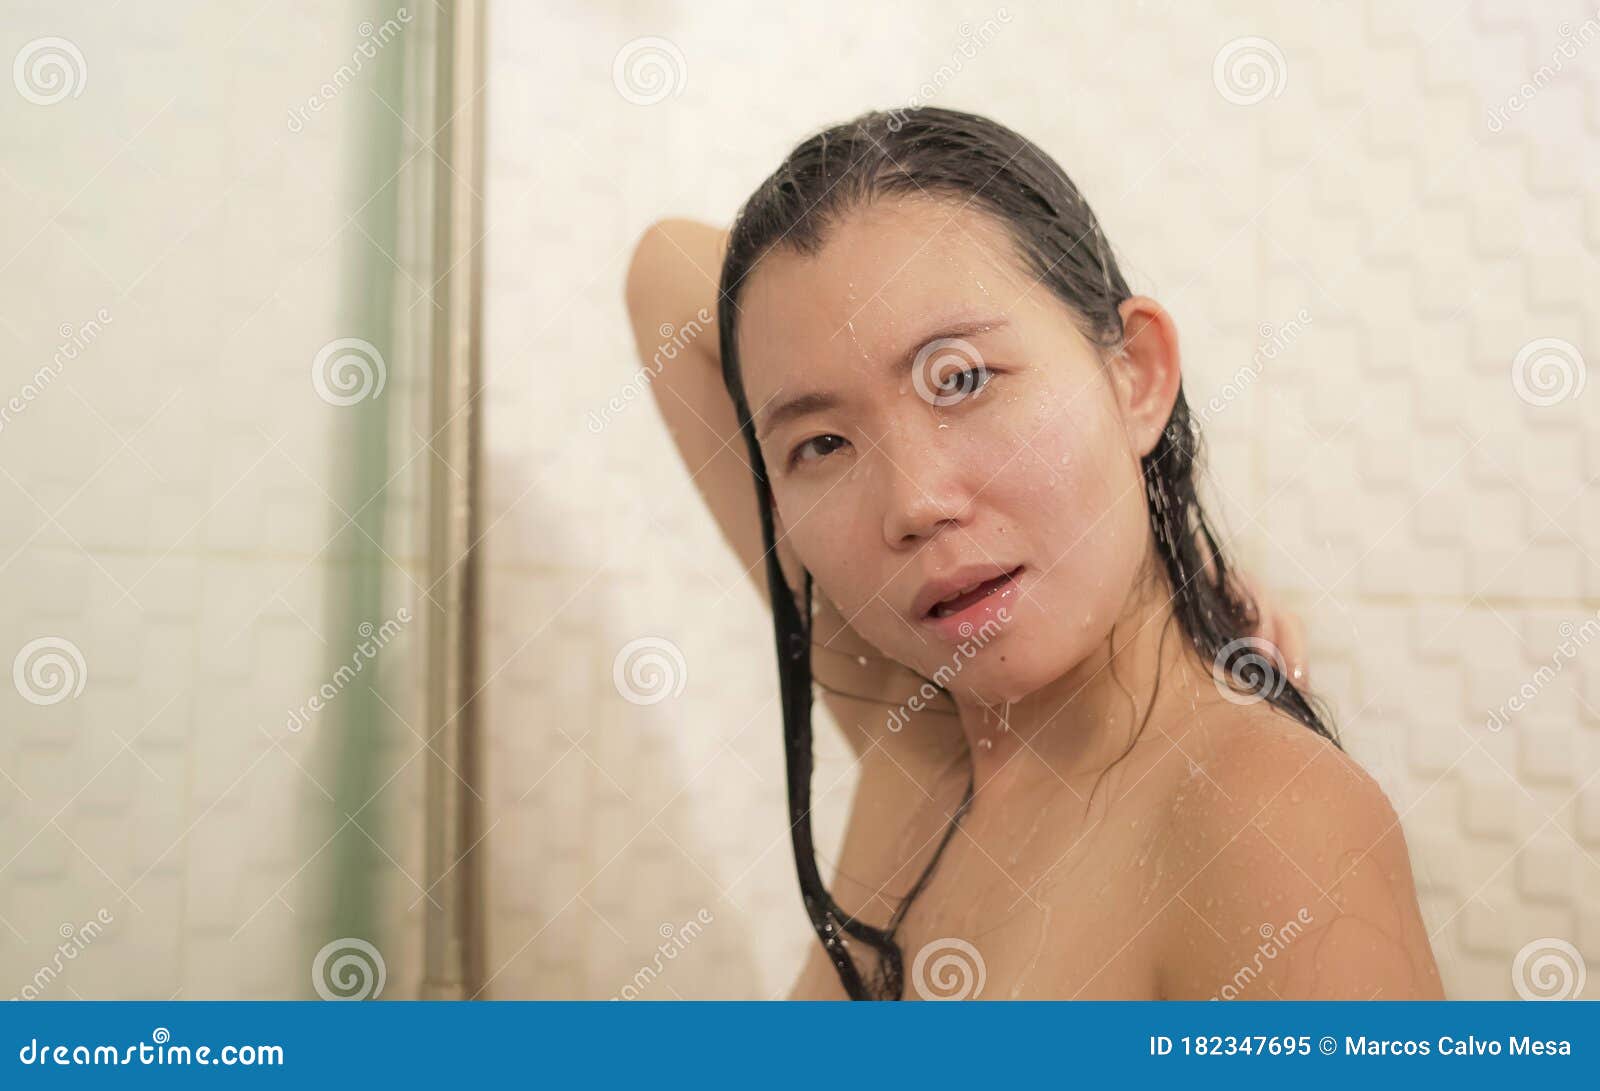 Talking to Asian girl Neneth in the bathroom